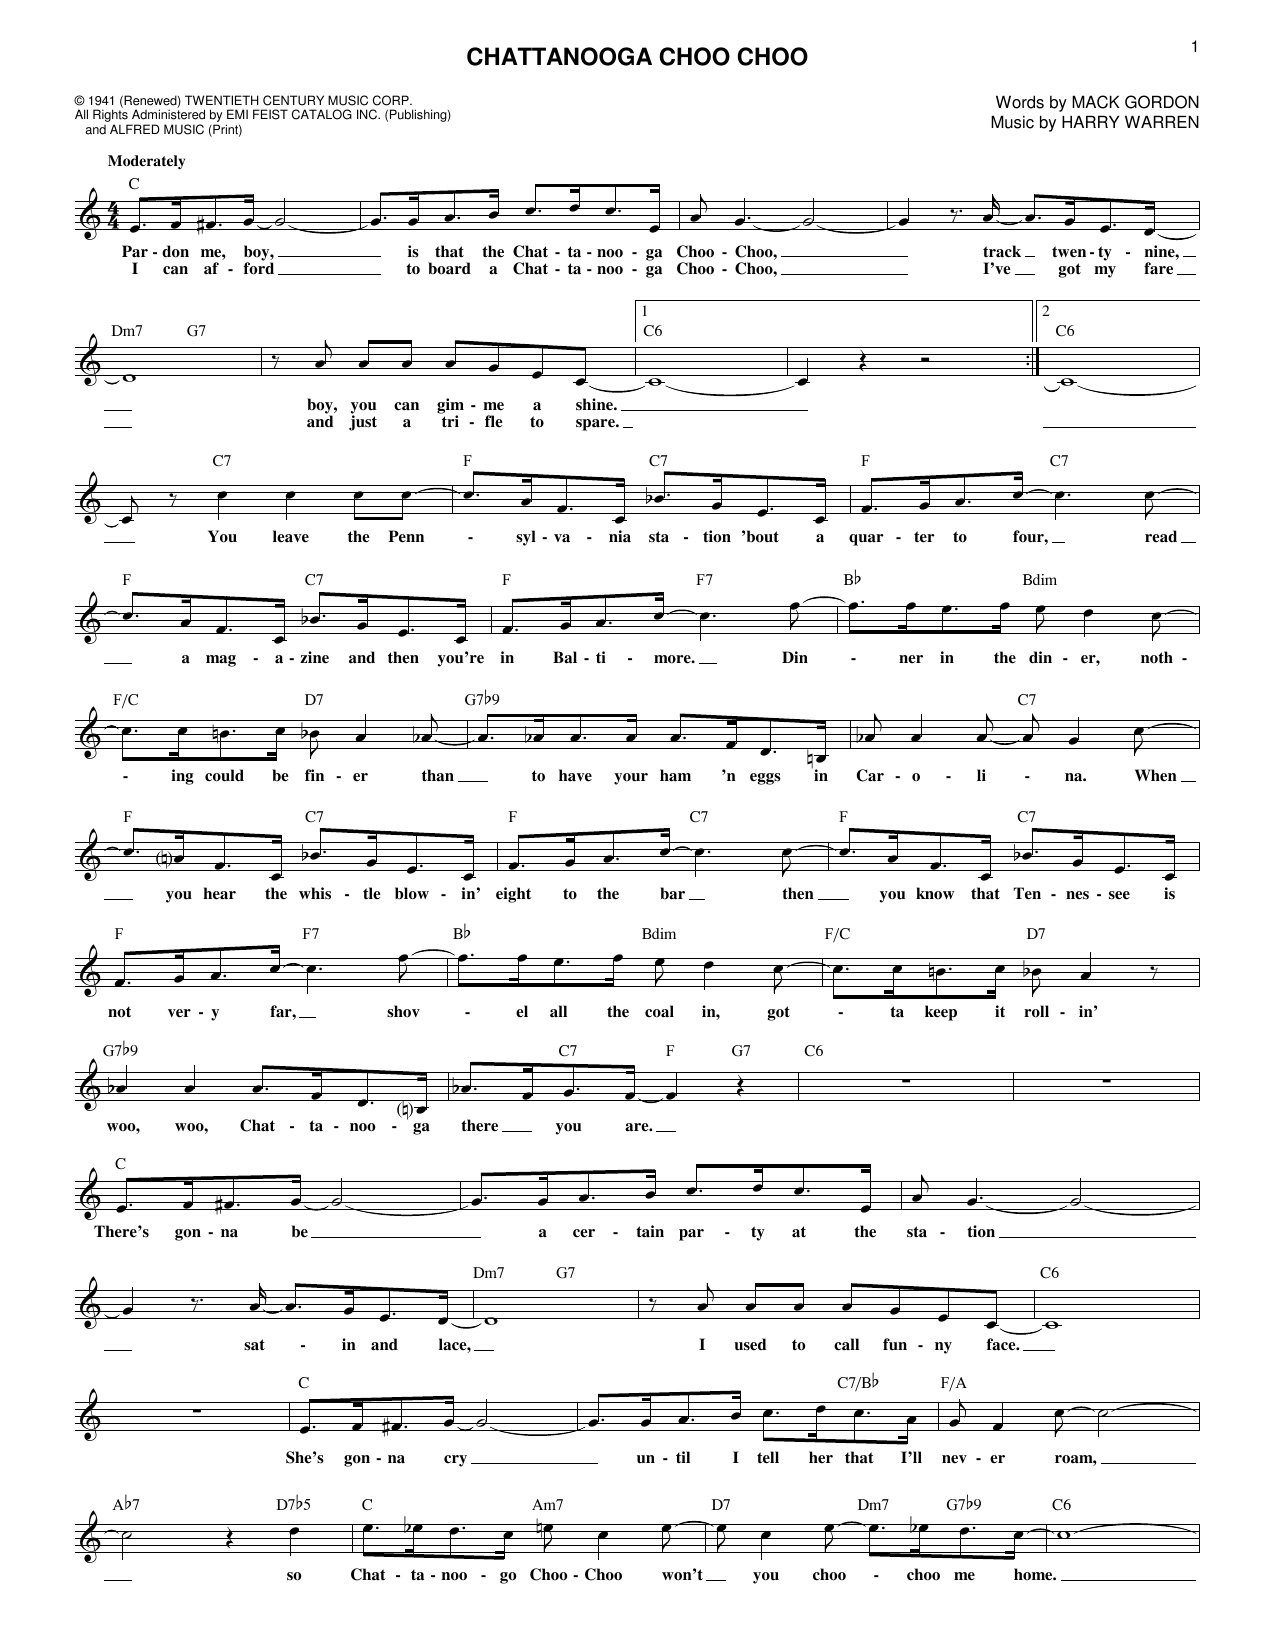 Mack Gordon Chattanooga Choo Choo Sheet Music Notes & Chords for Ukulele - Download or Print PDF